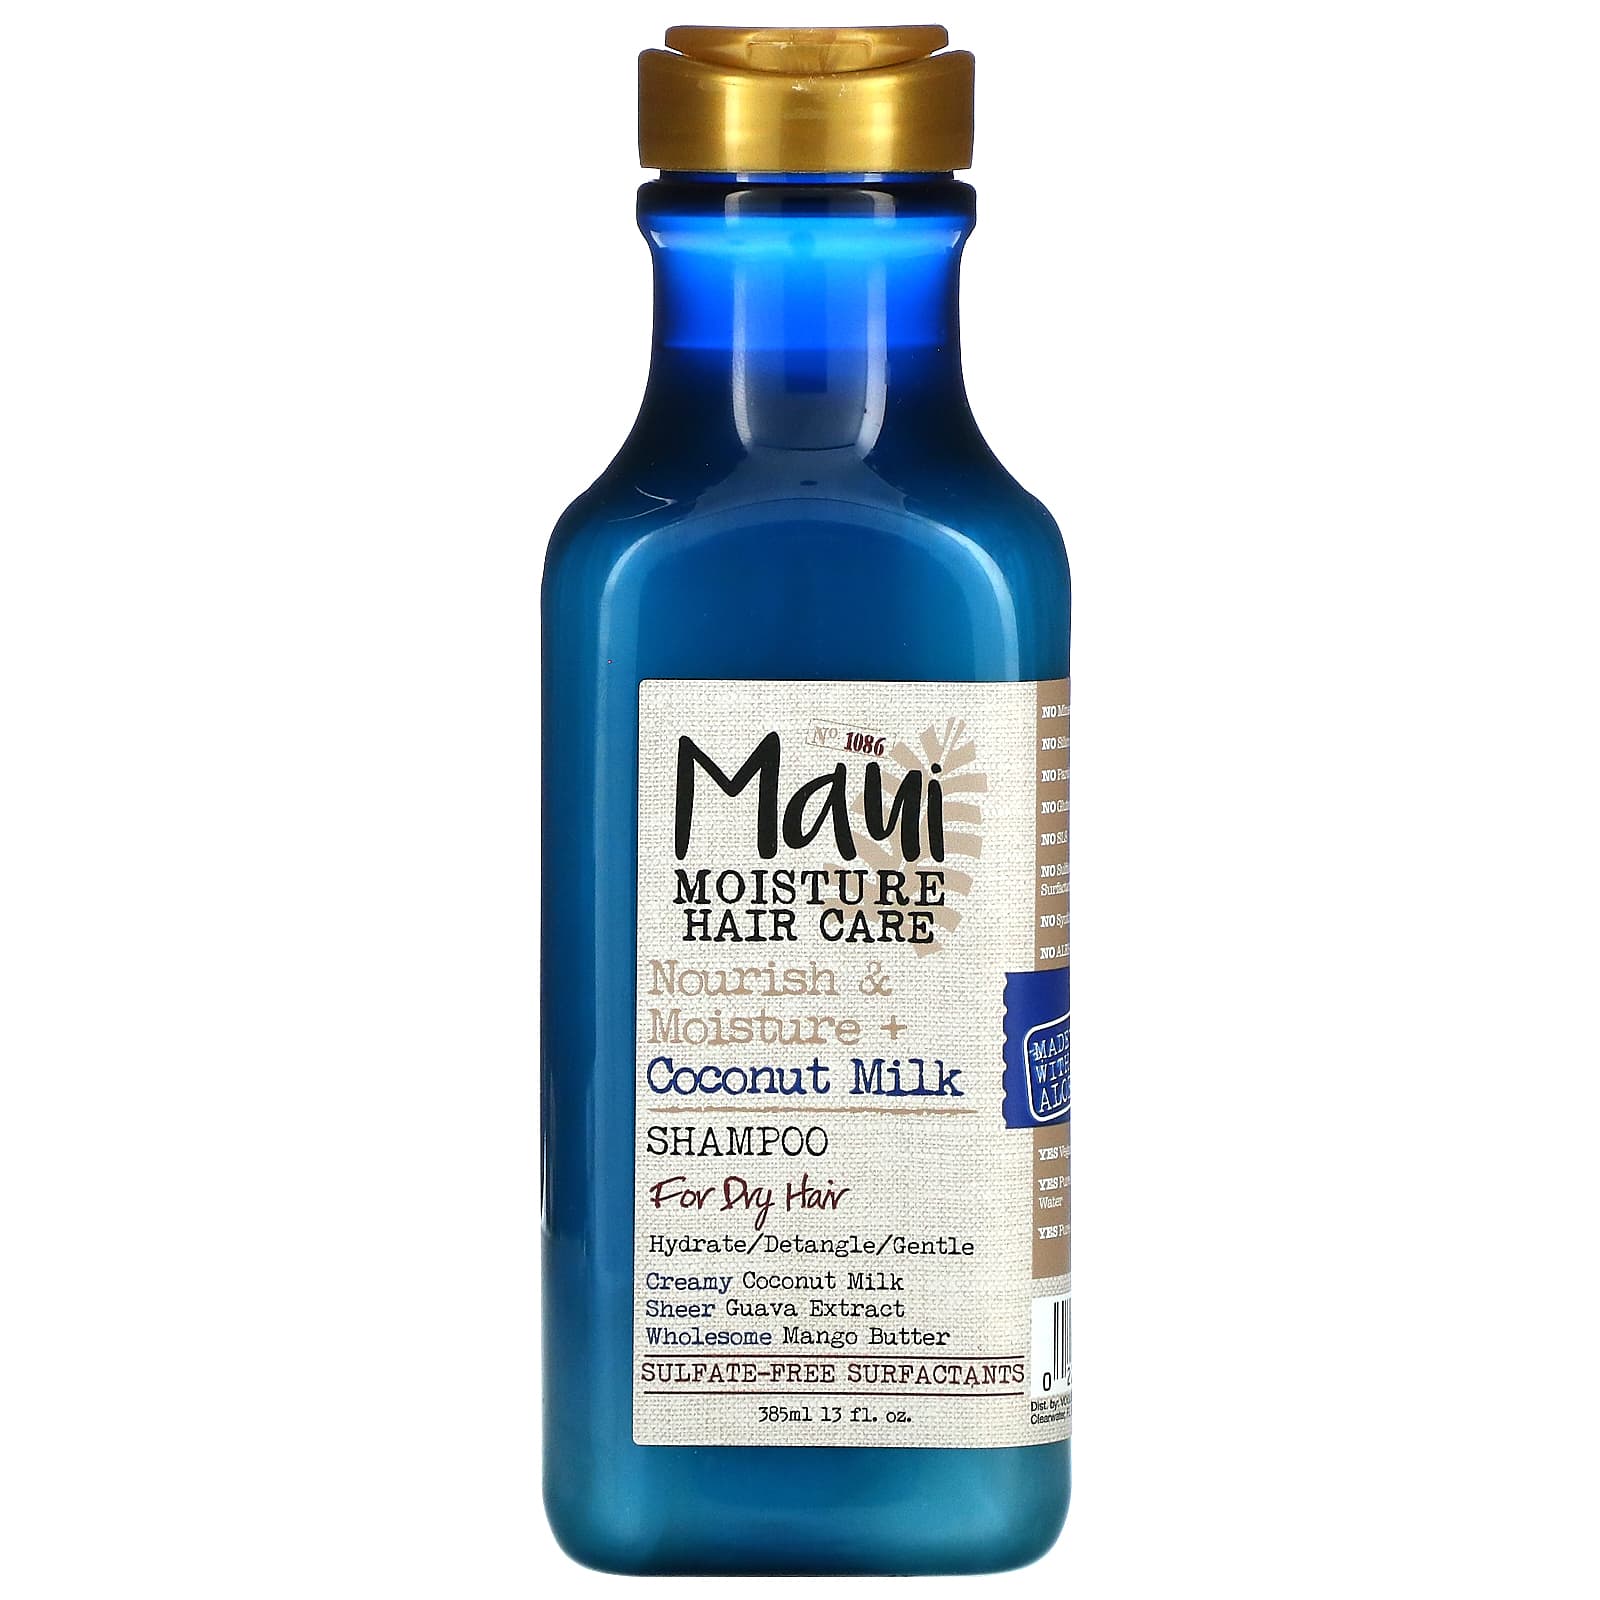 Maui Moisture, Hair Care, Nourish & Moisture + Coconut Milk Shampoo, For  Dry Hair, 13 fl oz (385 ml)